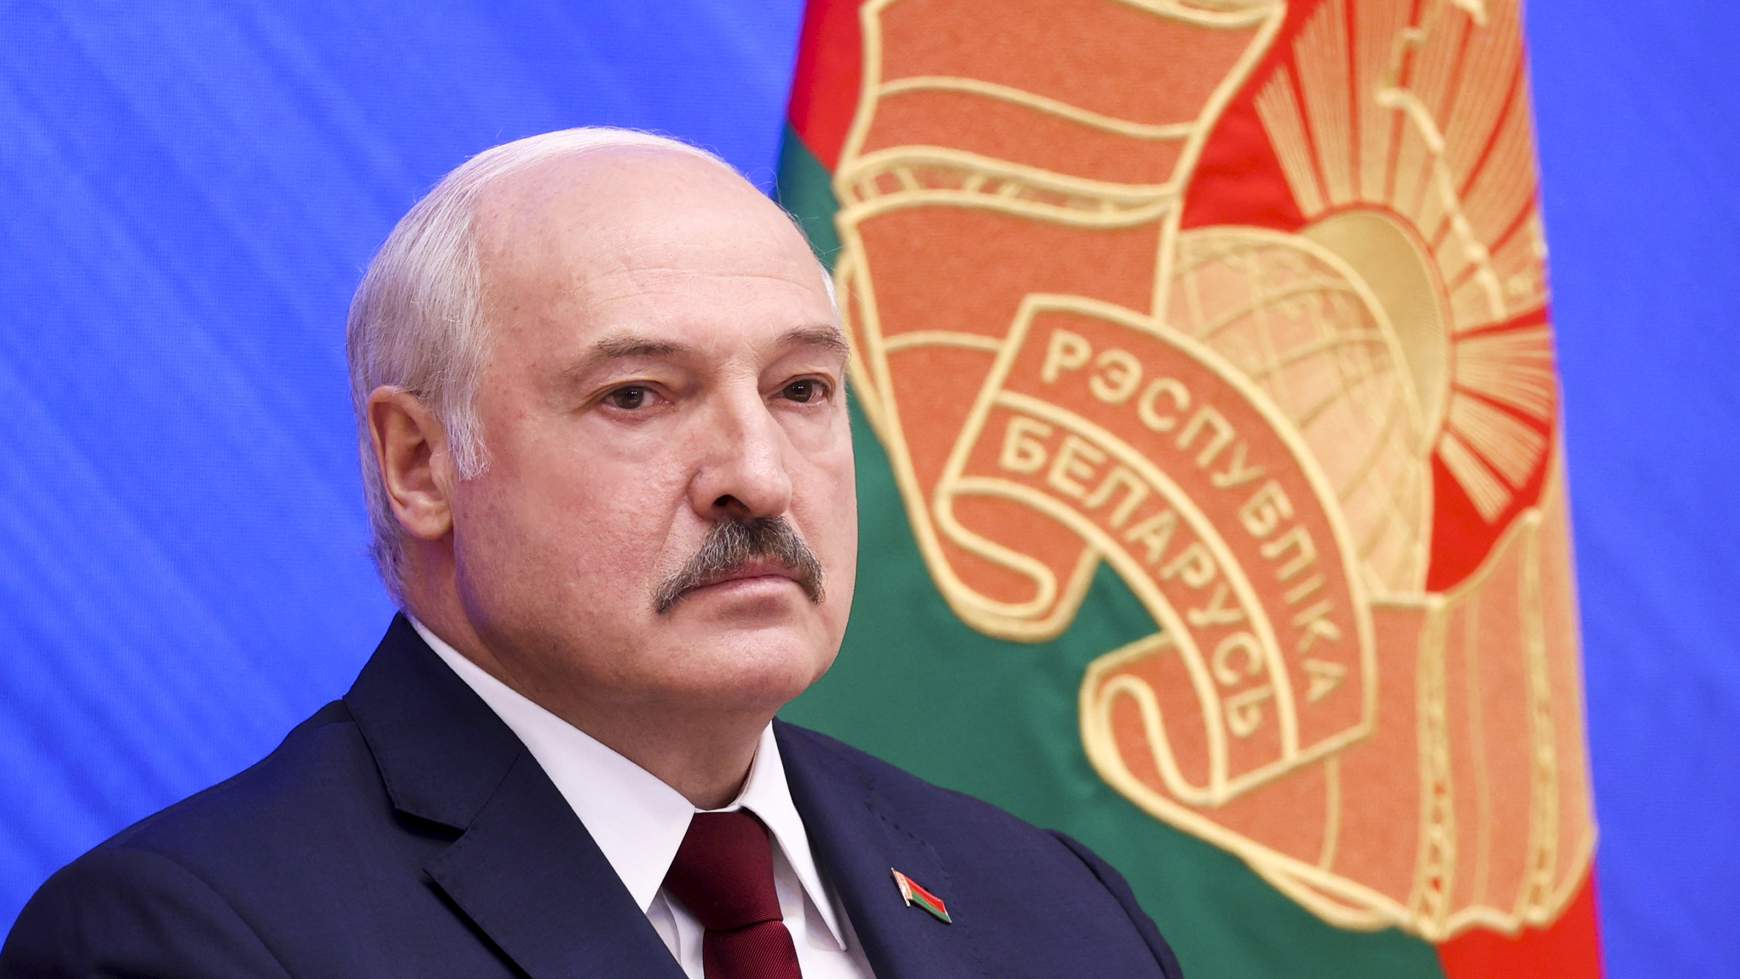 Lukasenka